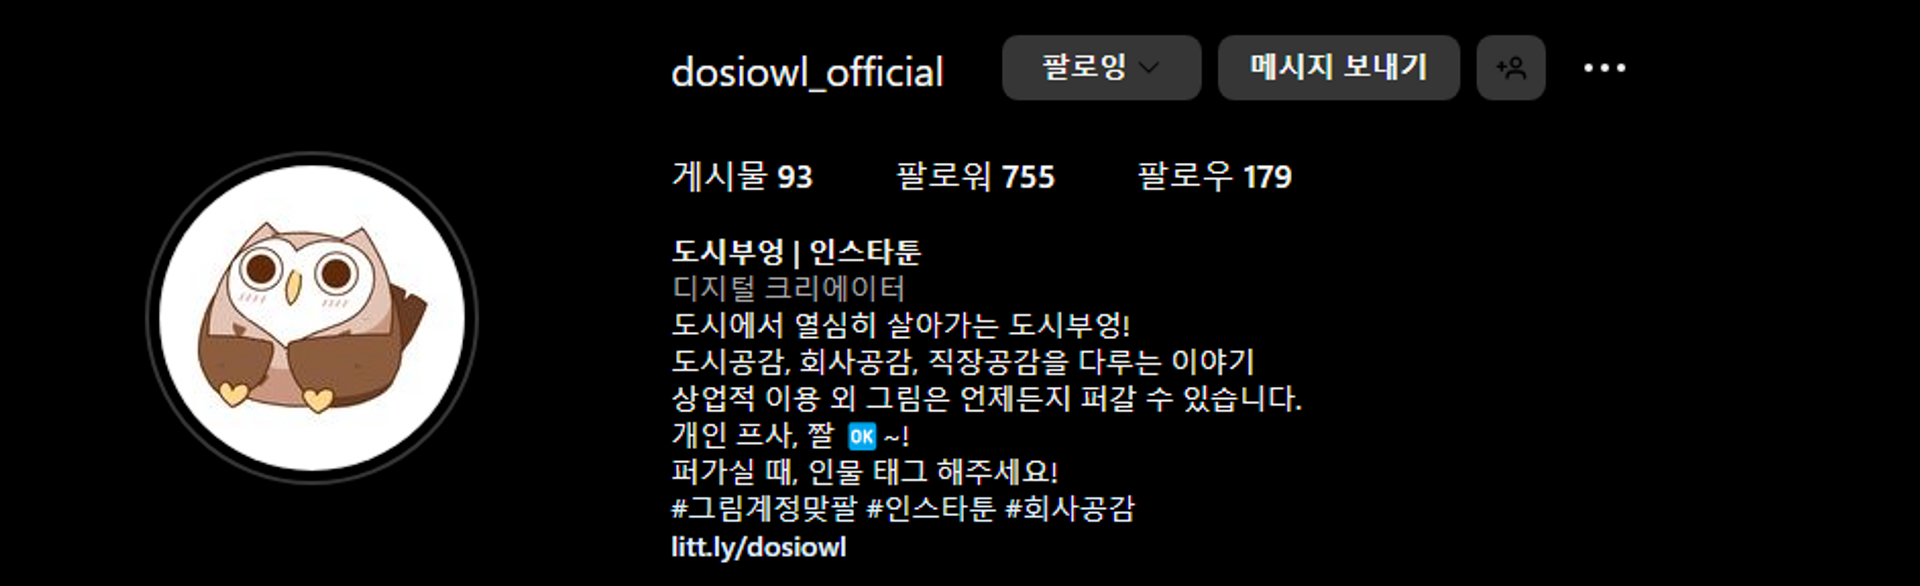 dosiowl profile